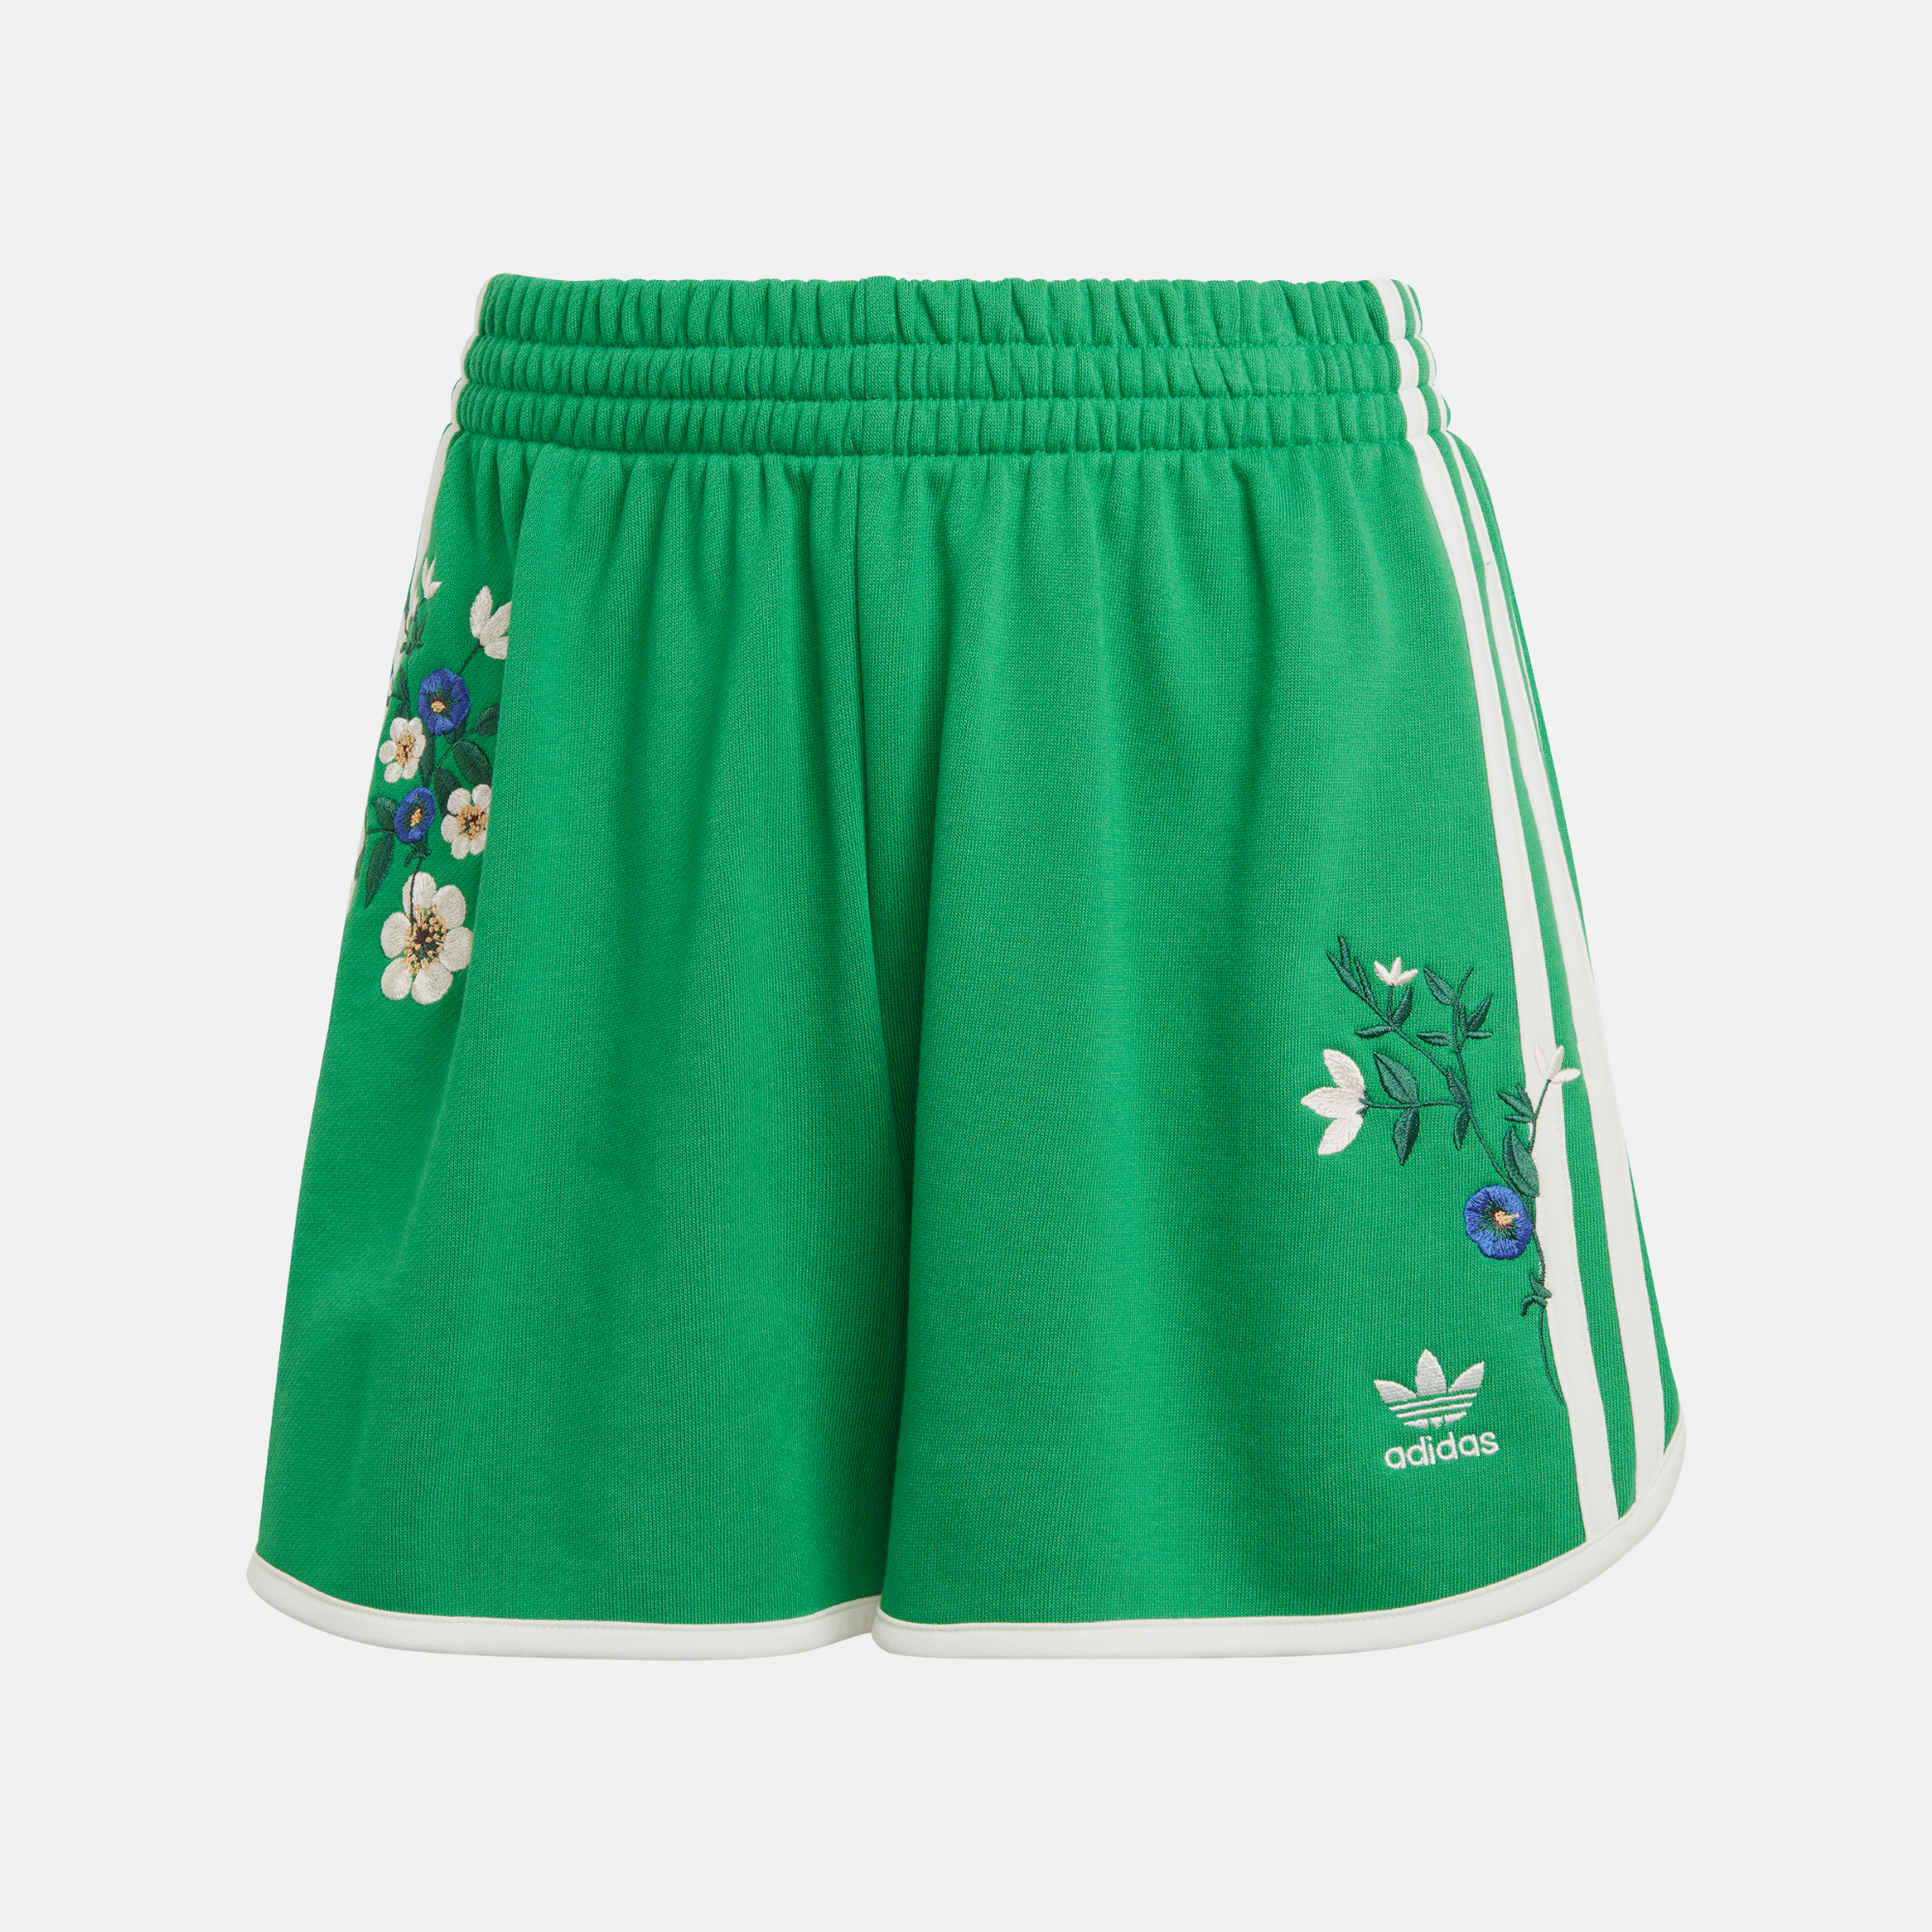 Adidas Women's Green Floral Shorts